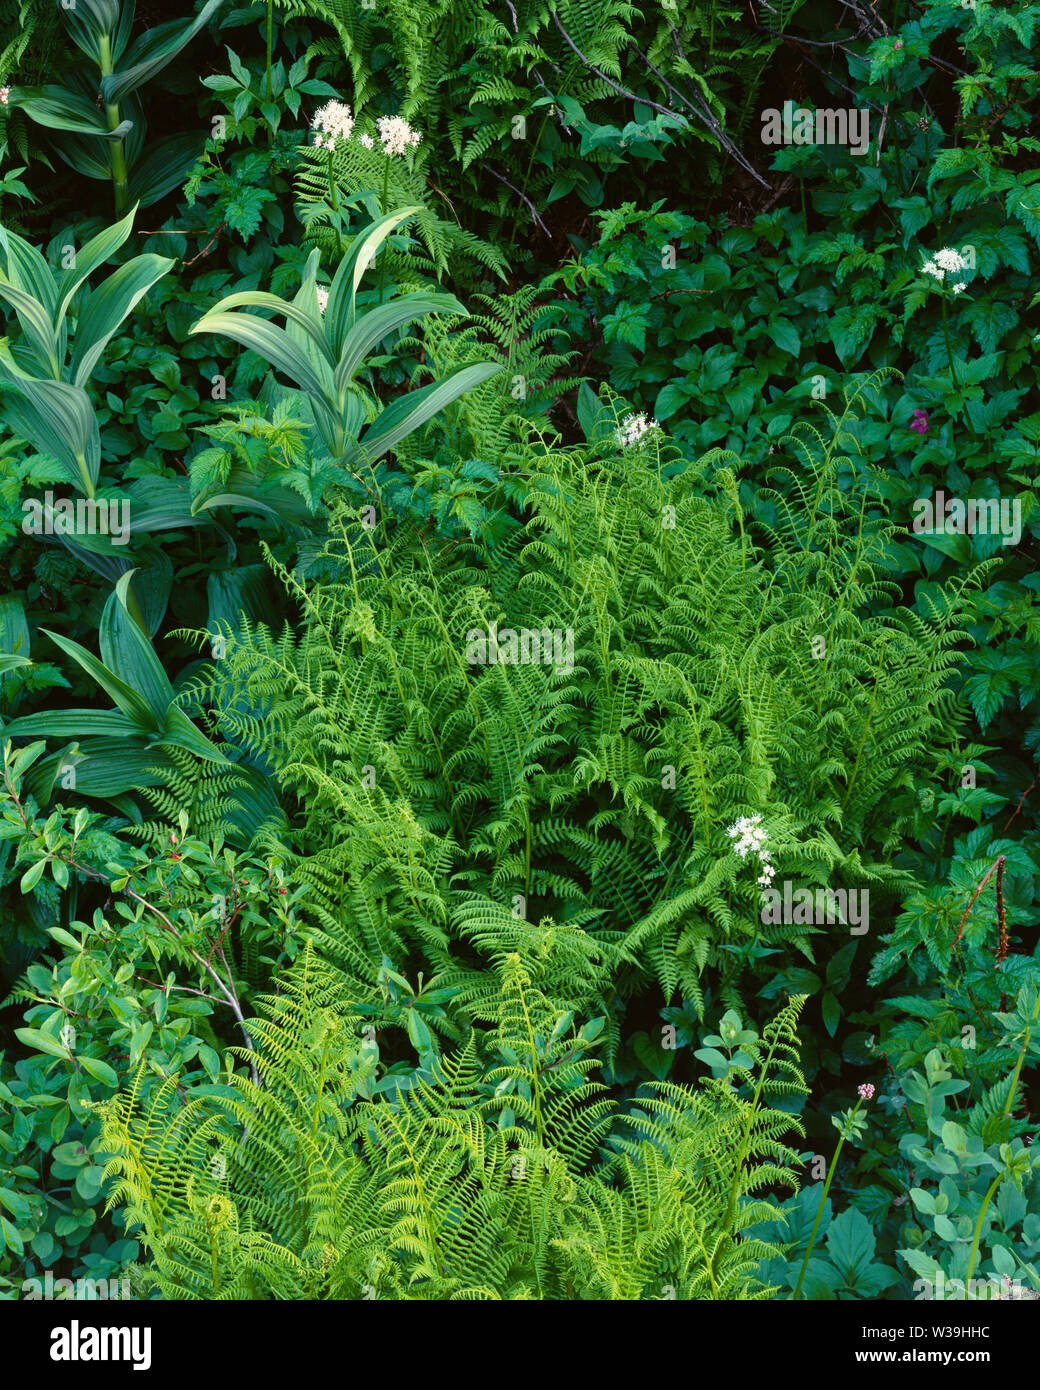 USA, Washington, Mt. Rainier National Park, Lush spring flora including hellebore, valerian and ferns. Stock Photo